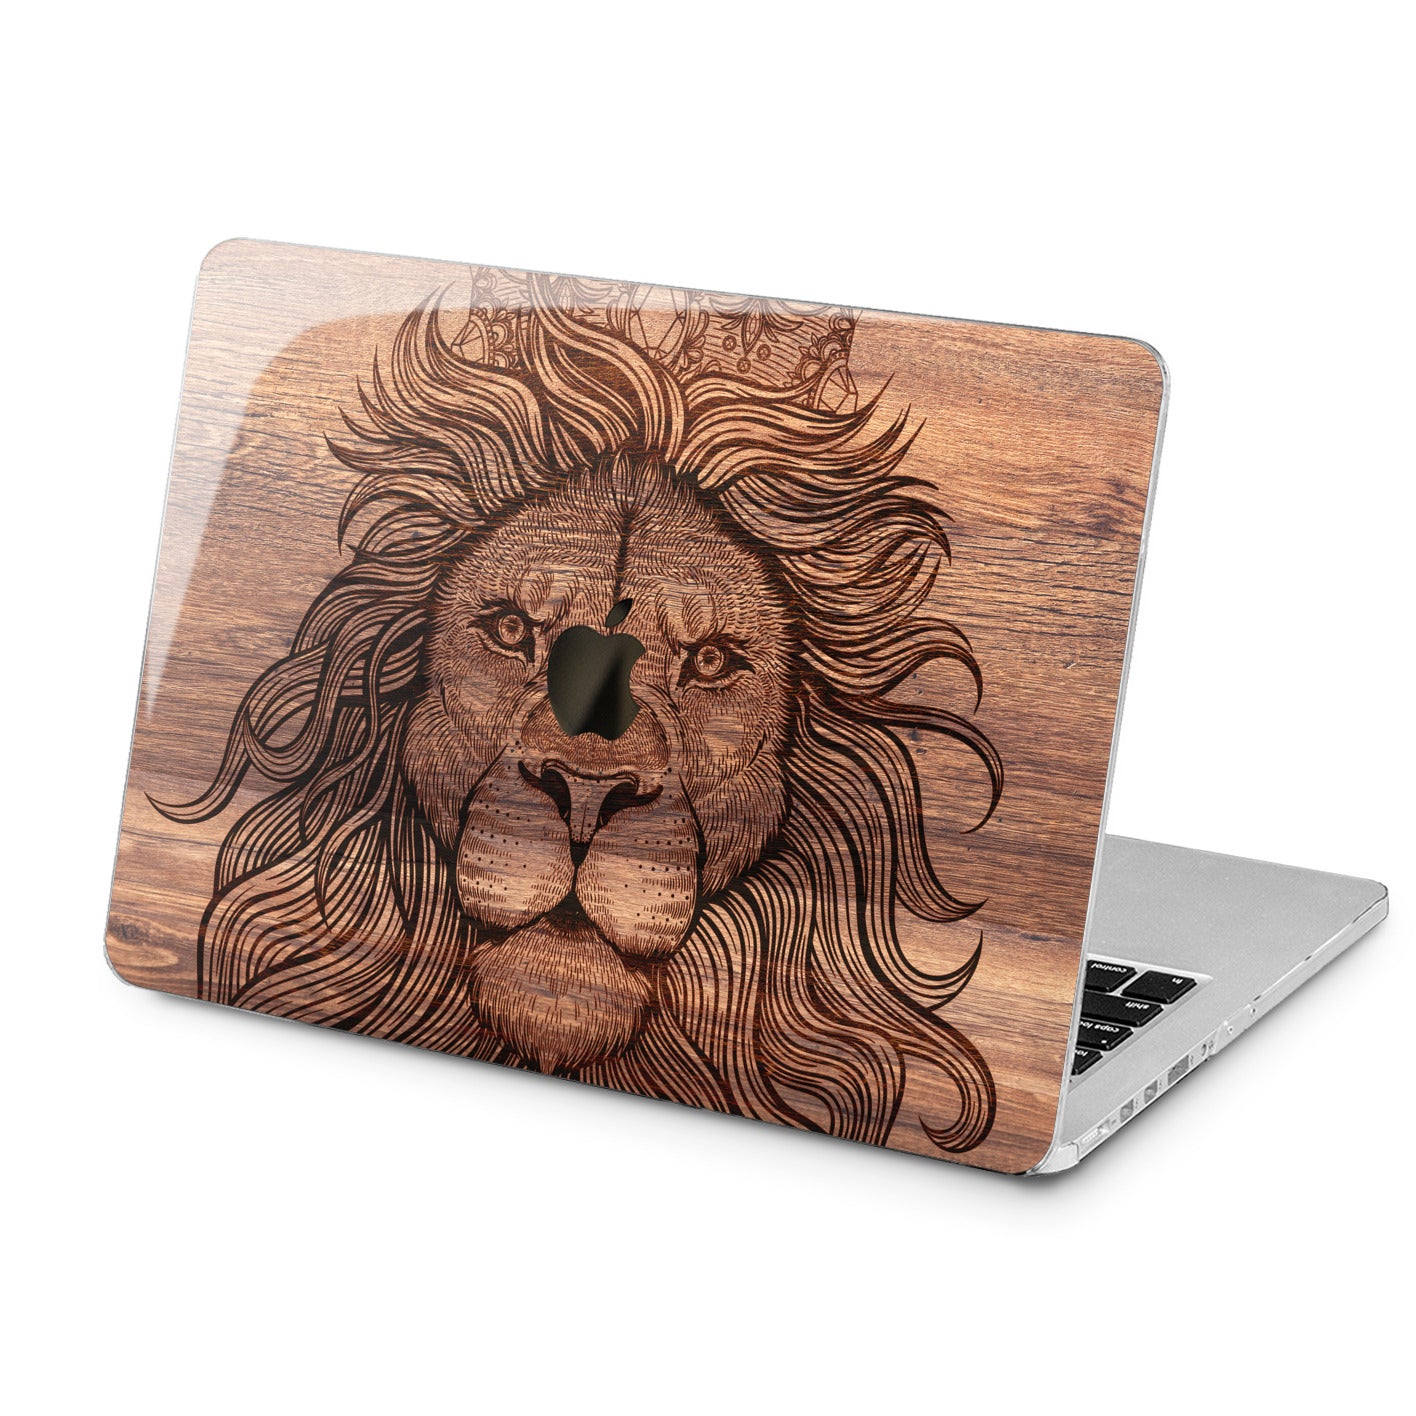 Lex Altern Lex Altern Lion Theme Case for your Laptop Apple Macbook.